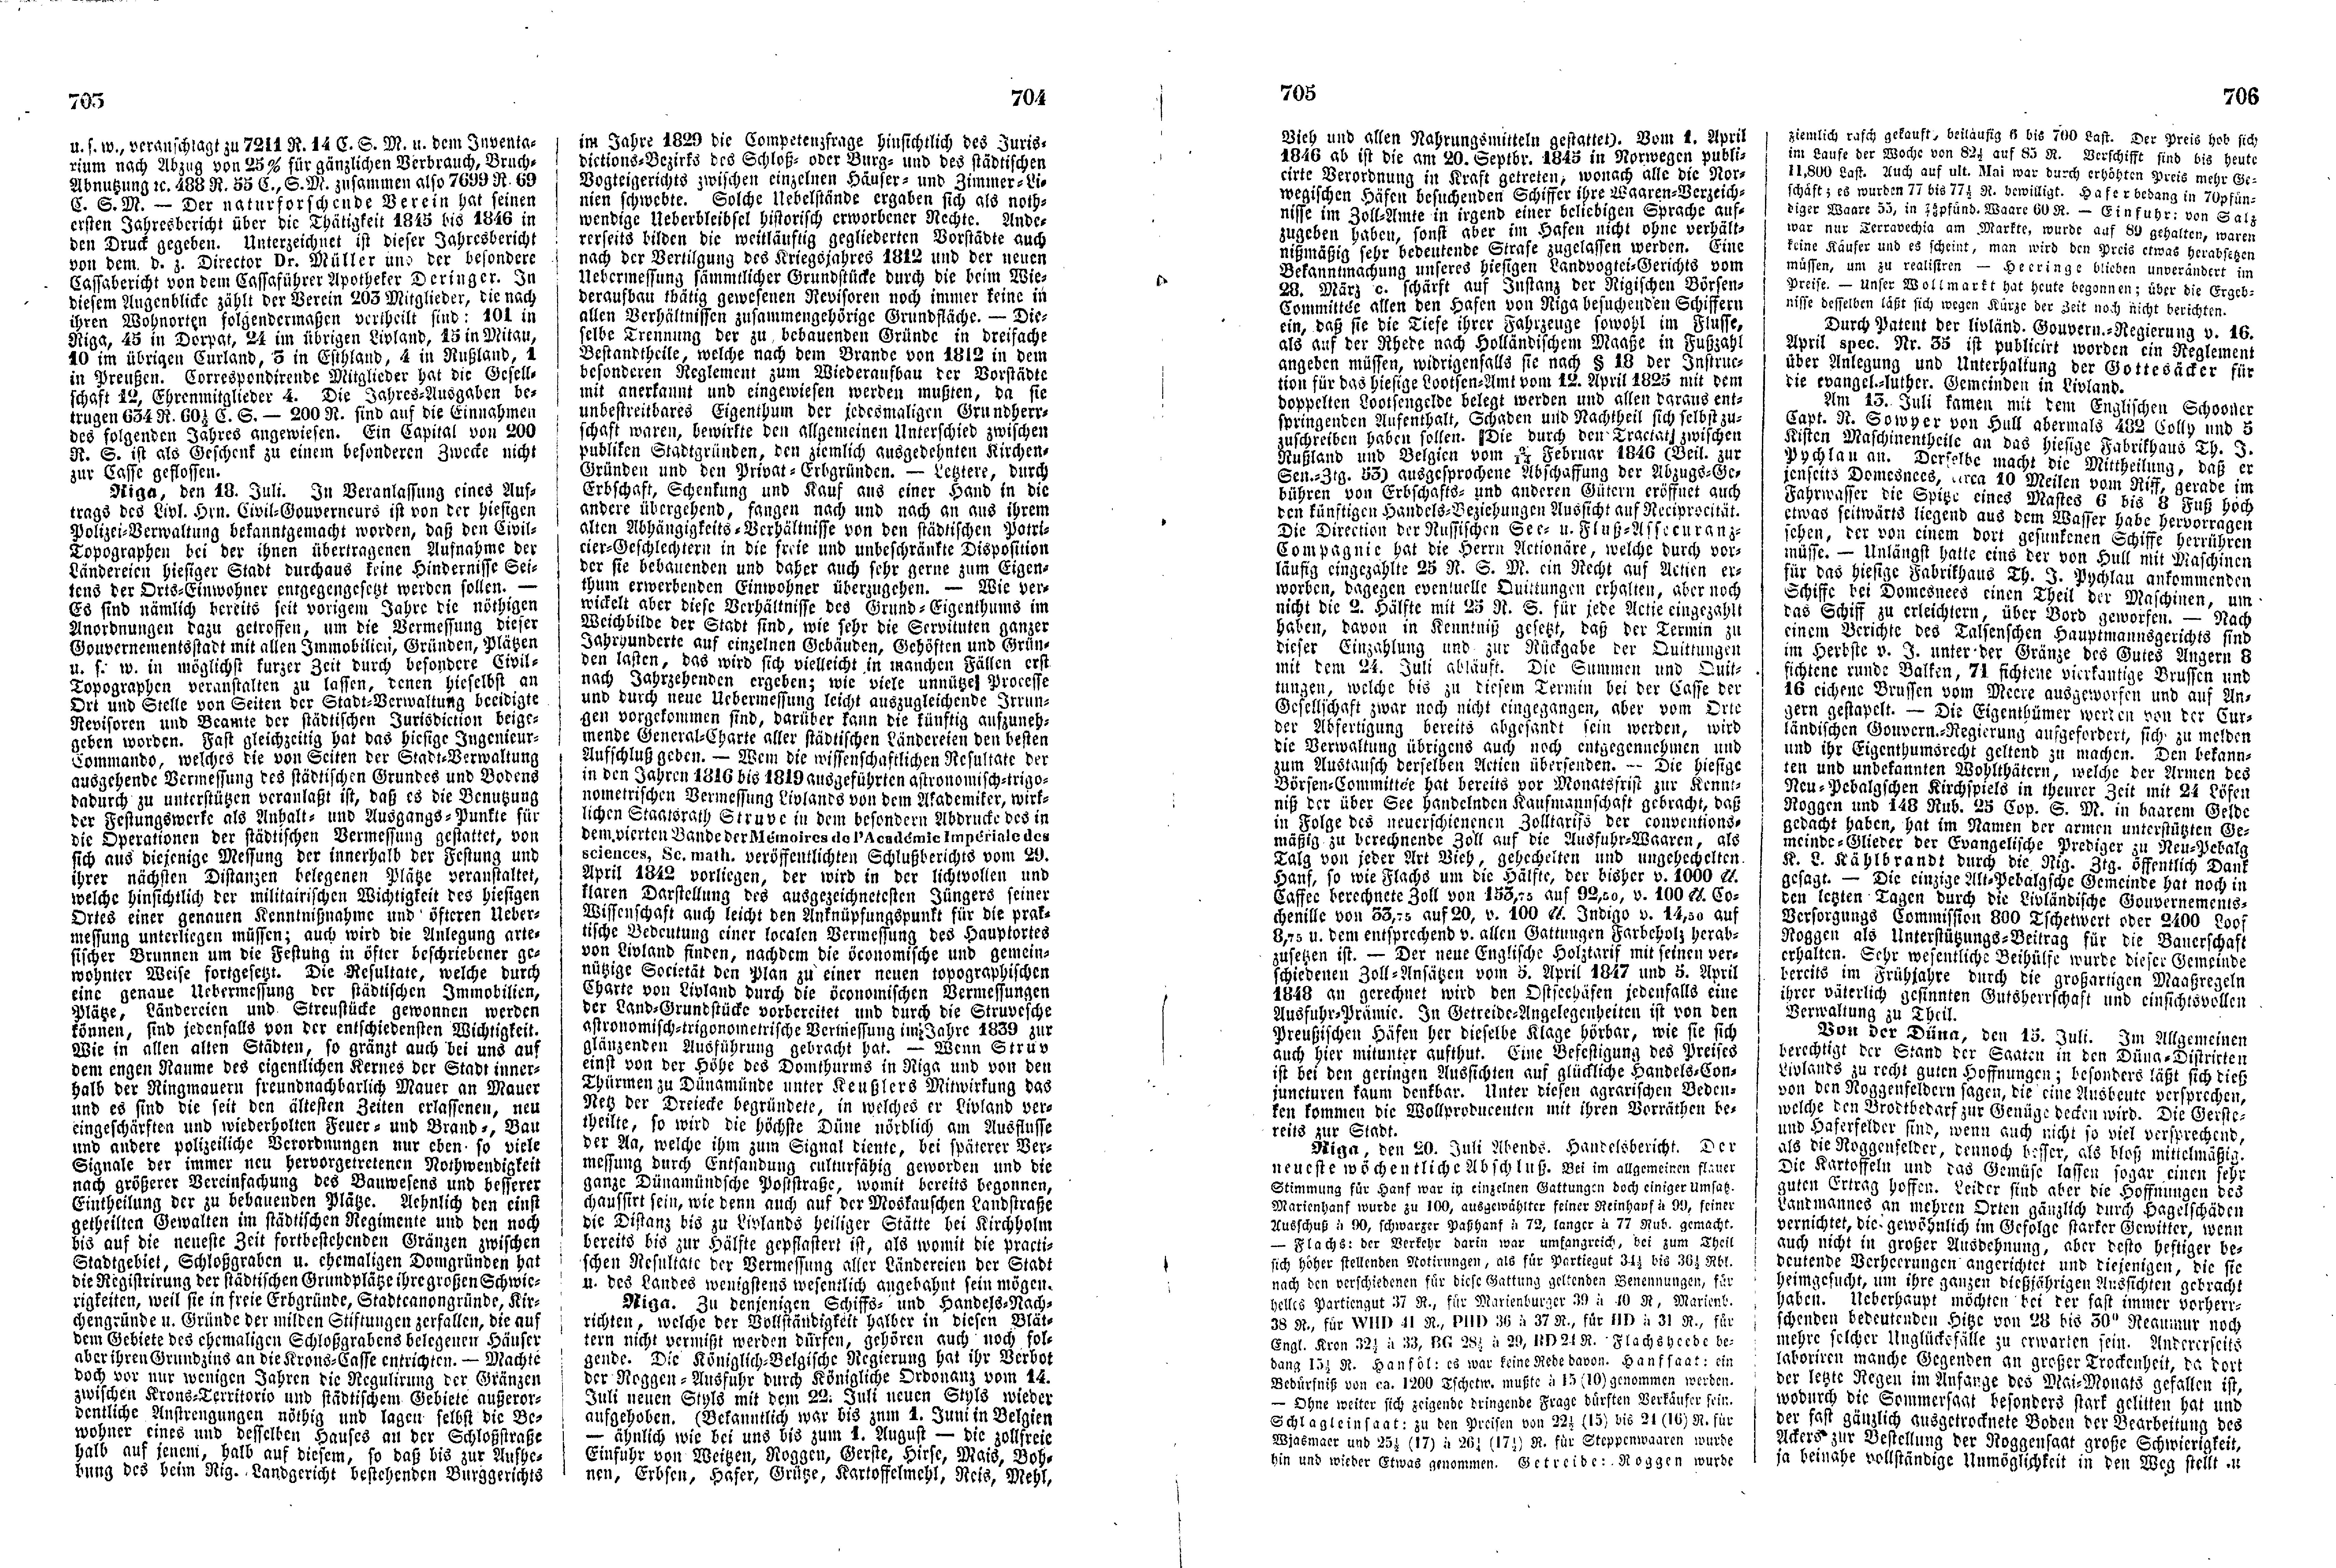 Das Inland [11] (1846) | 181. (703-706) Main body of text